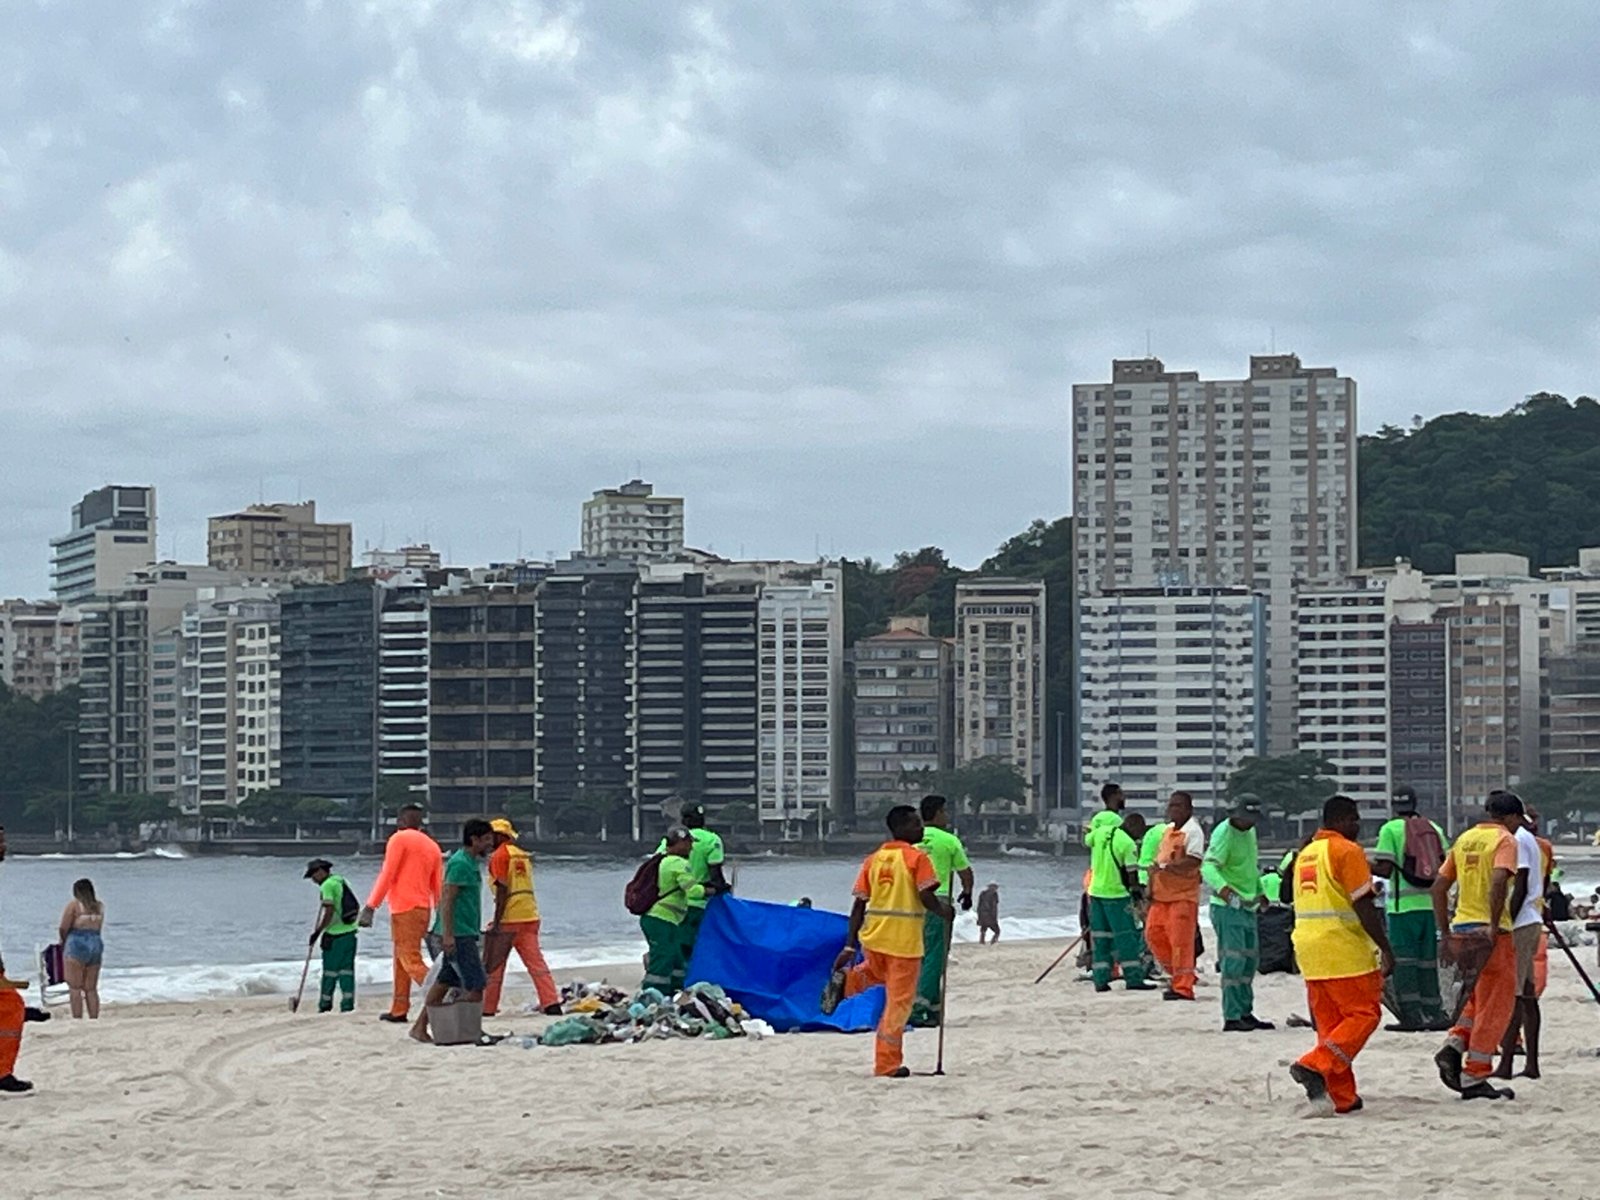 Niterói: praias e orla limpas após limpeza da Clin